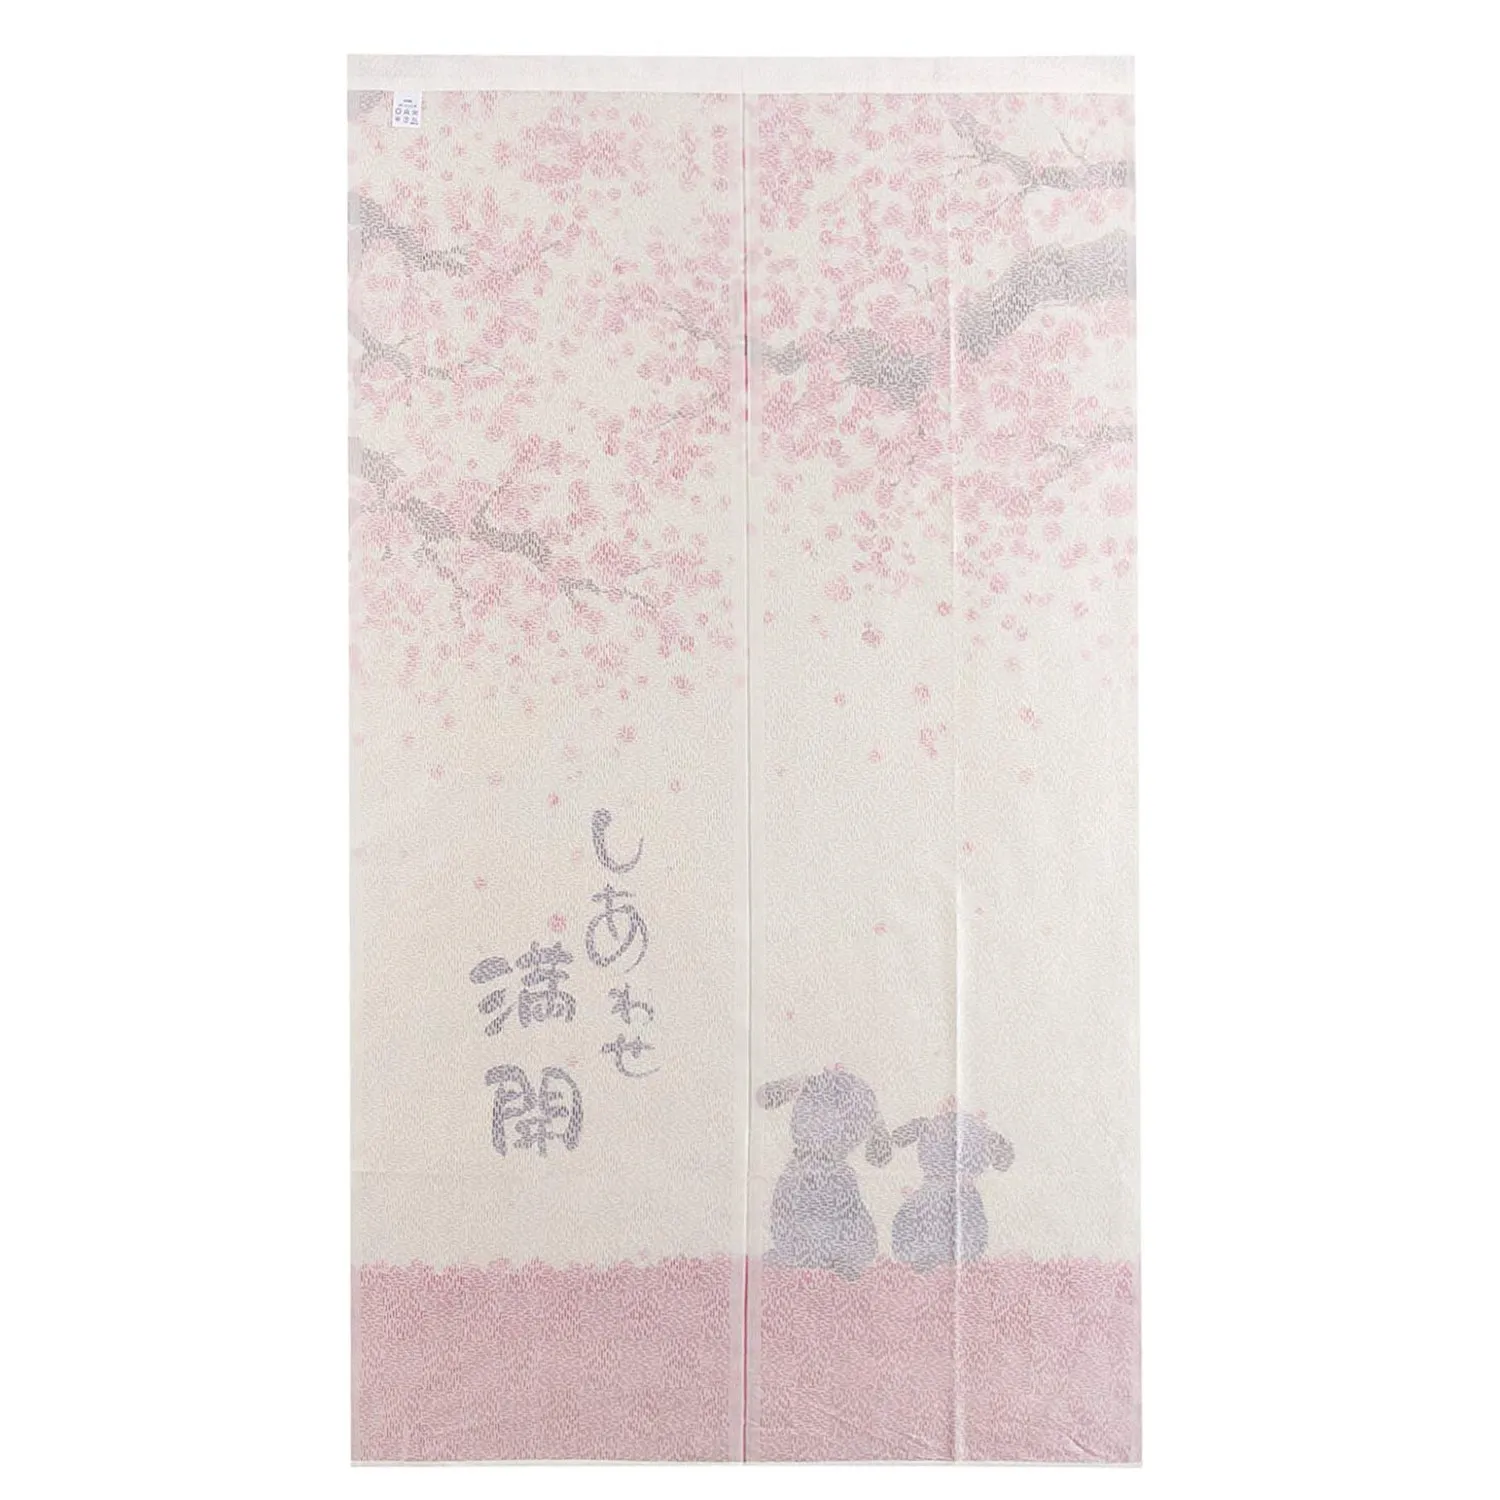 Легкая в японском стиле занавеска 85X150 см Happy Dogs Cherry Blossom